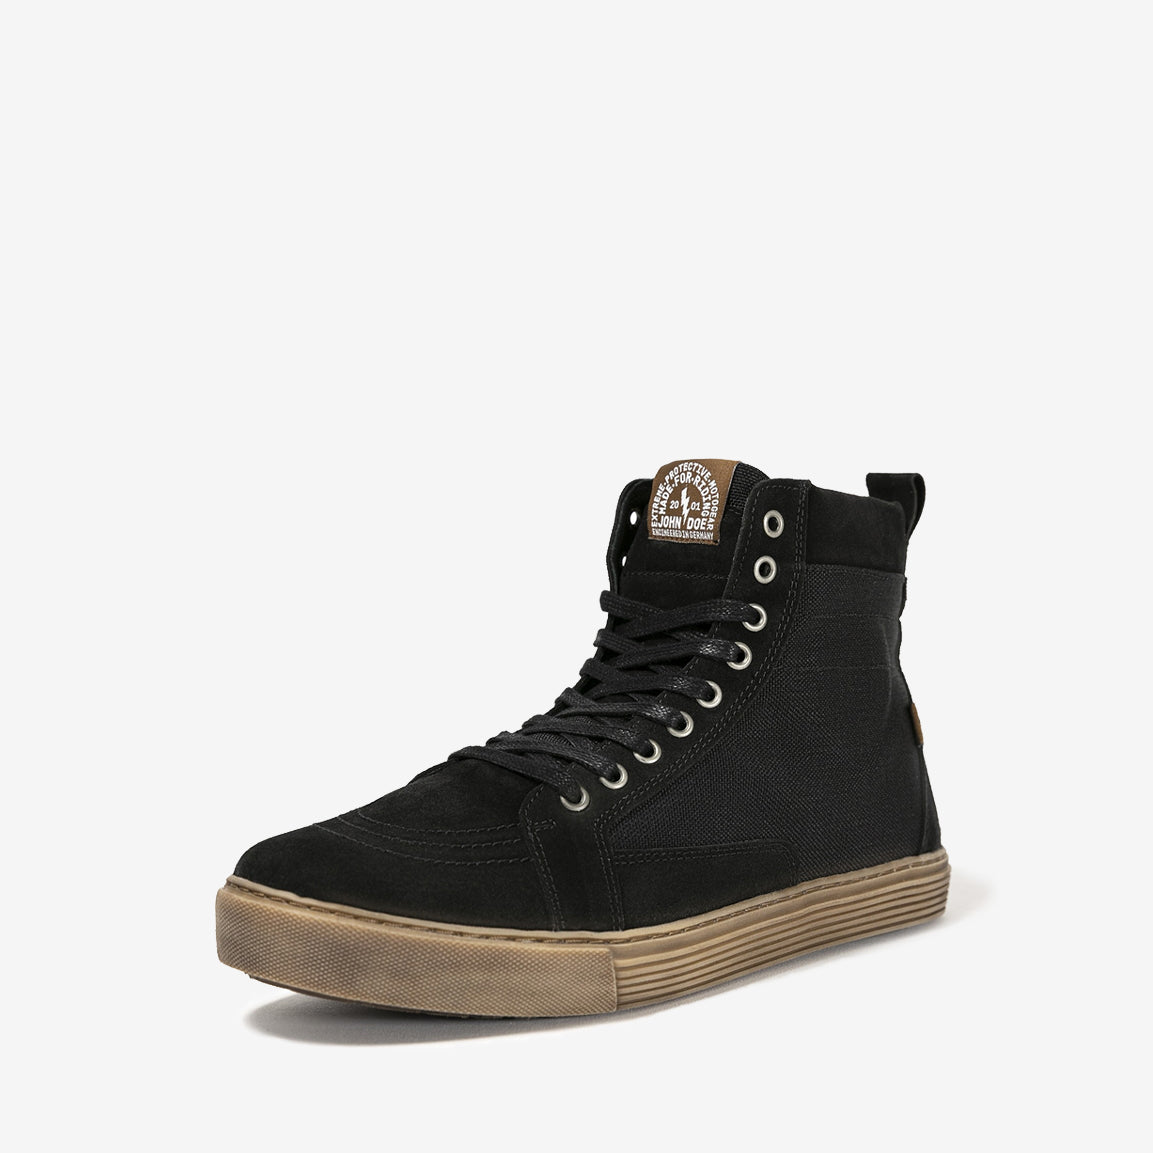 John Doe Neo Motorrad Sneaker-Boot - black/brown